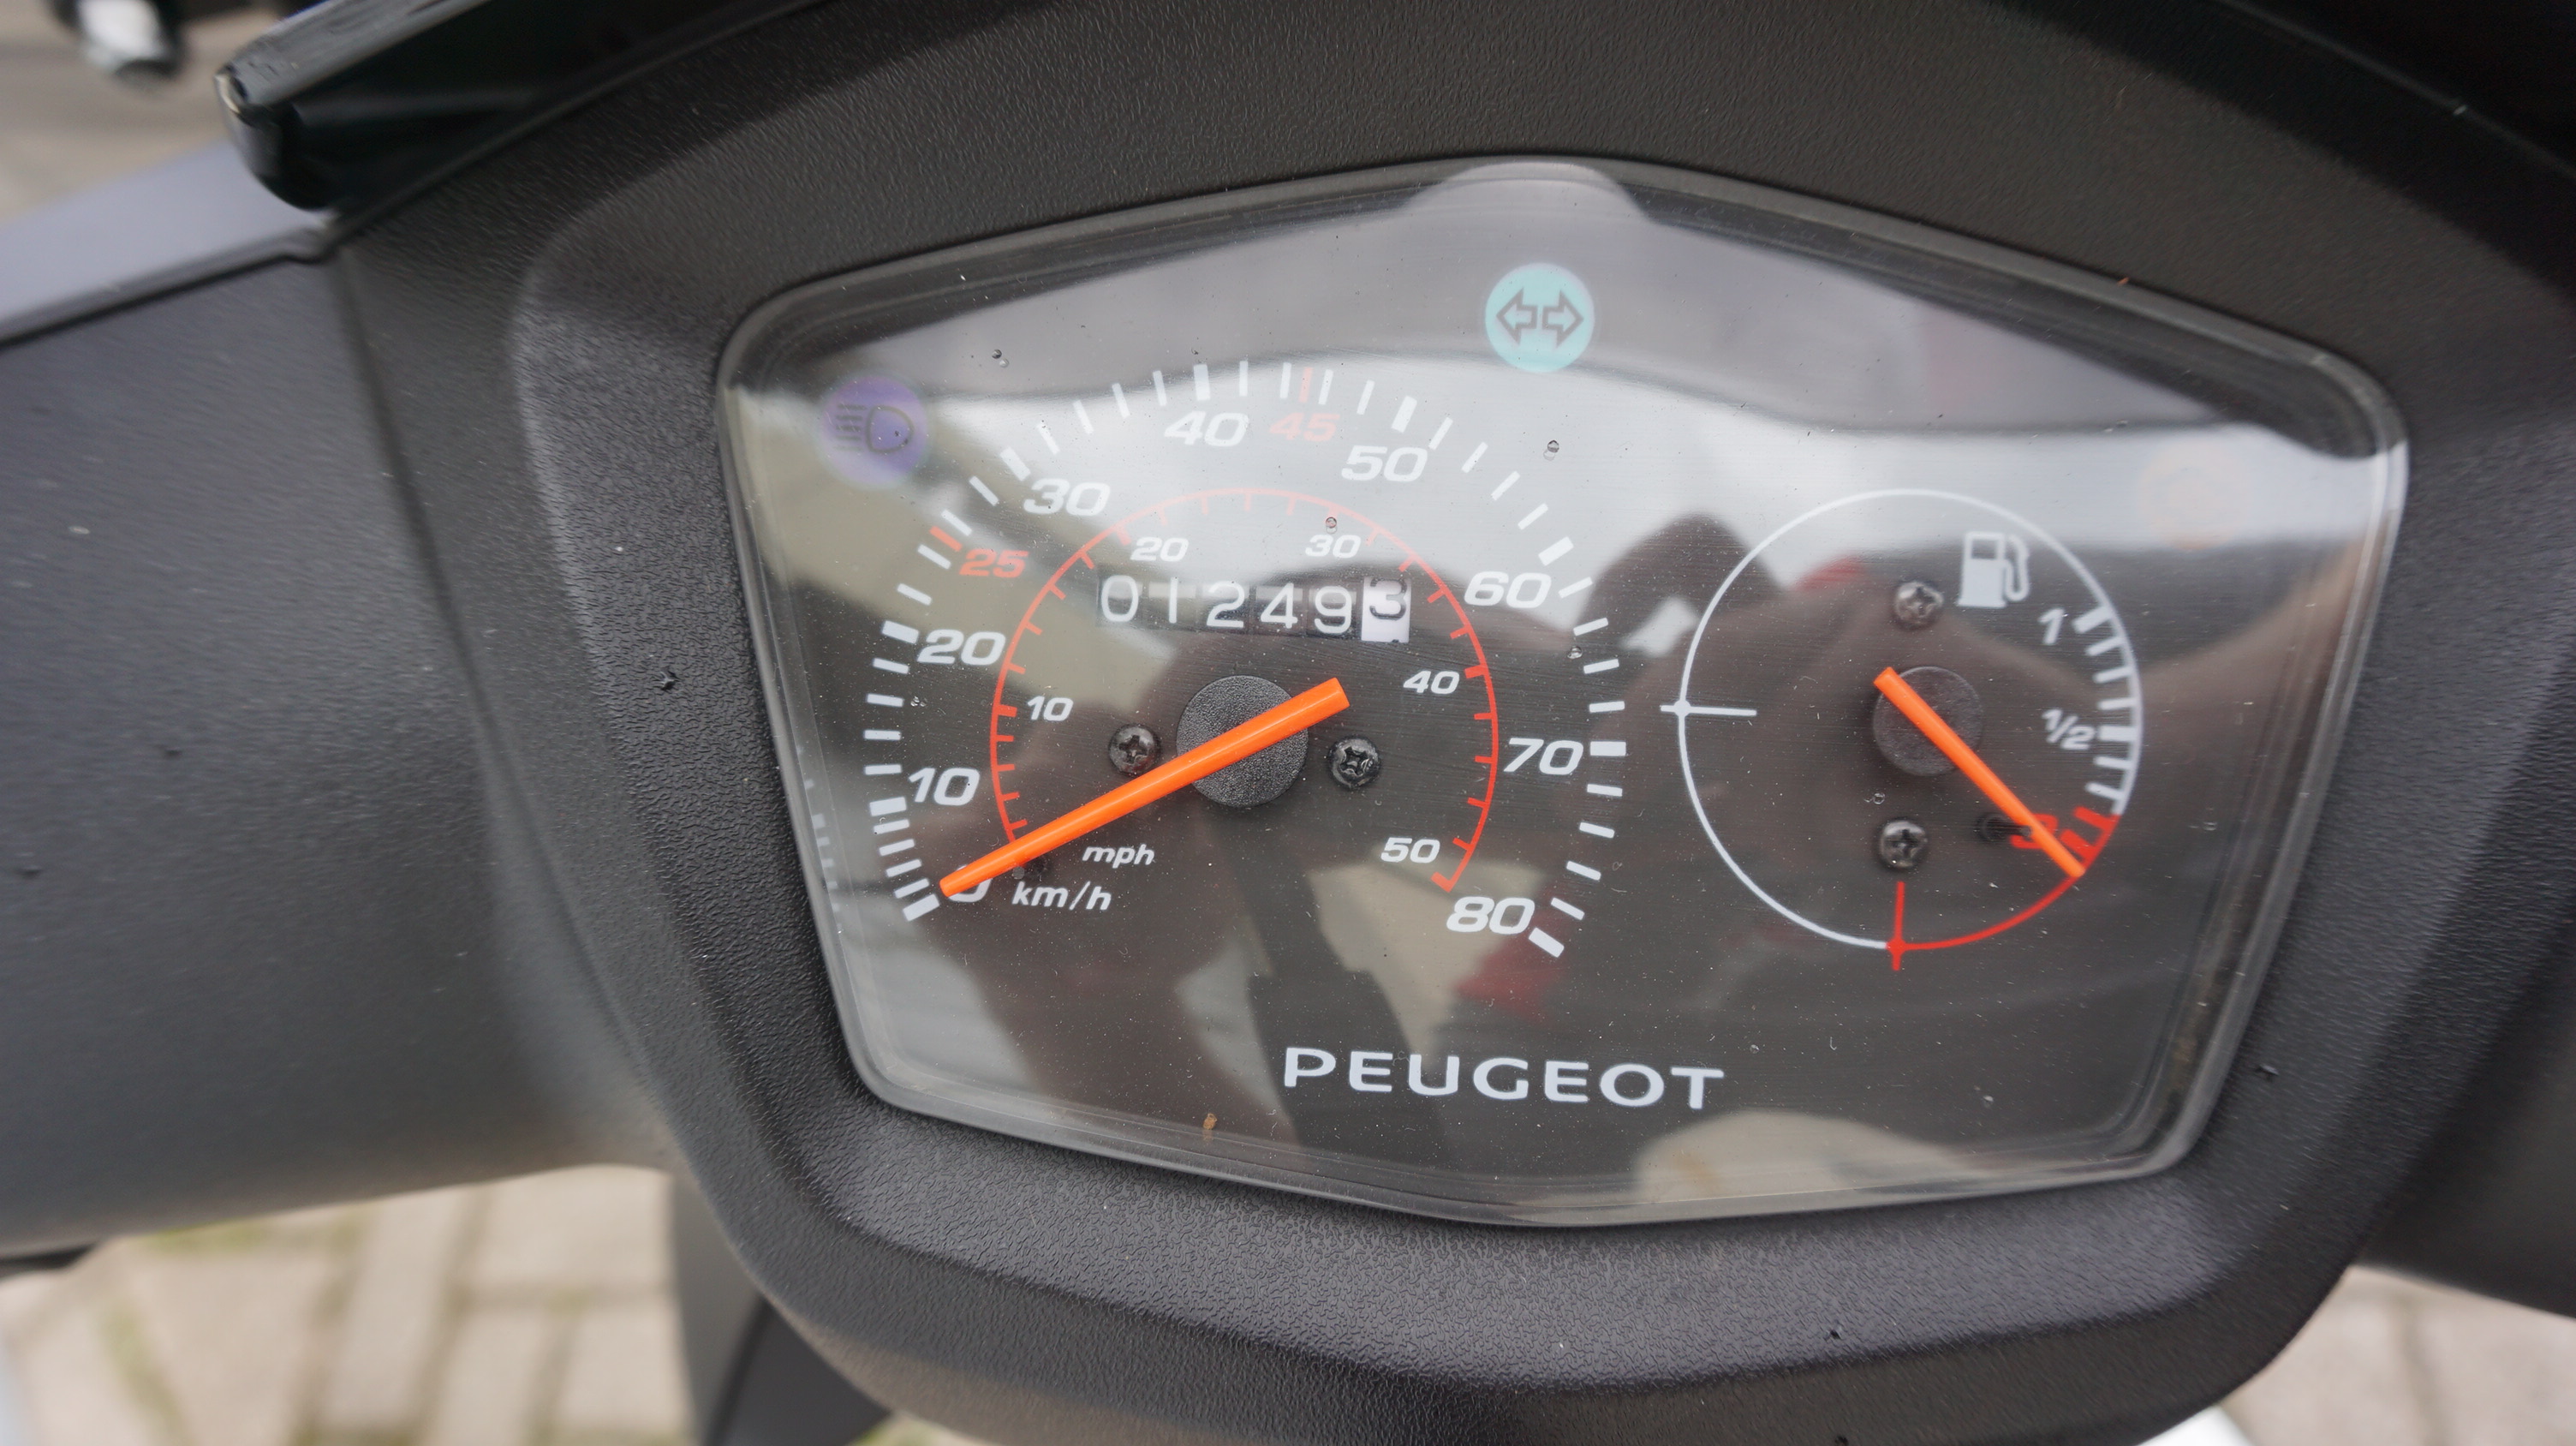 Peugeot Kisbee Black Edition snorscooter